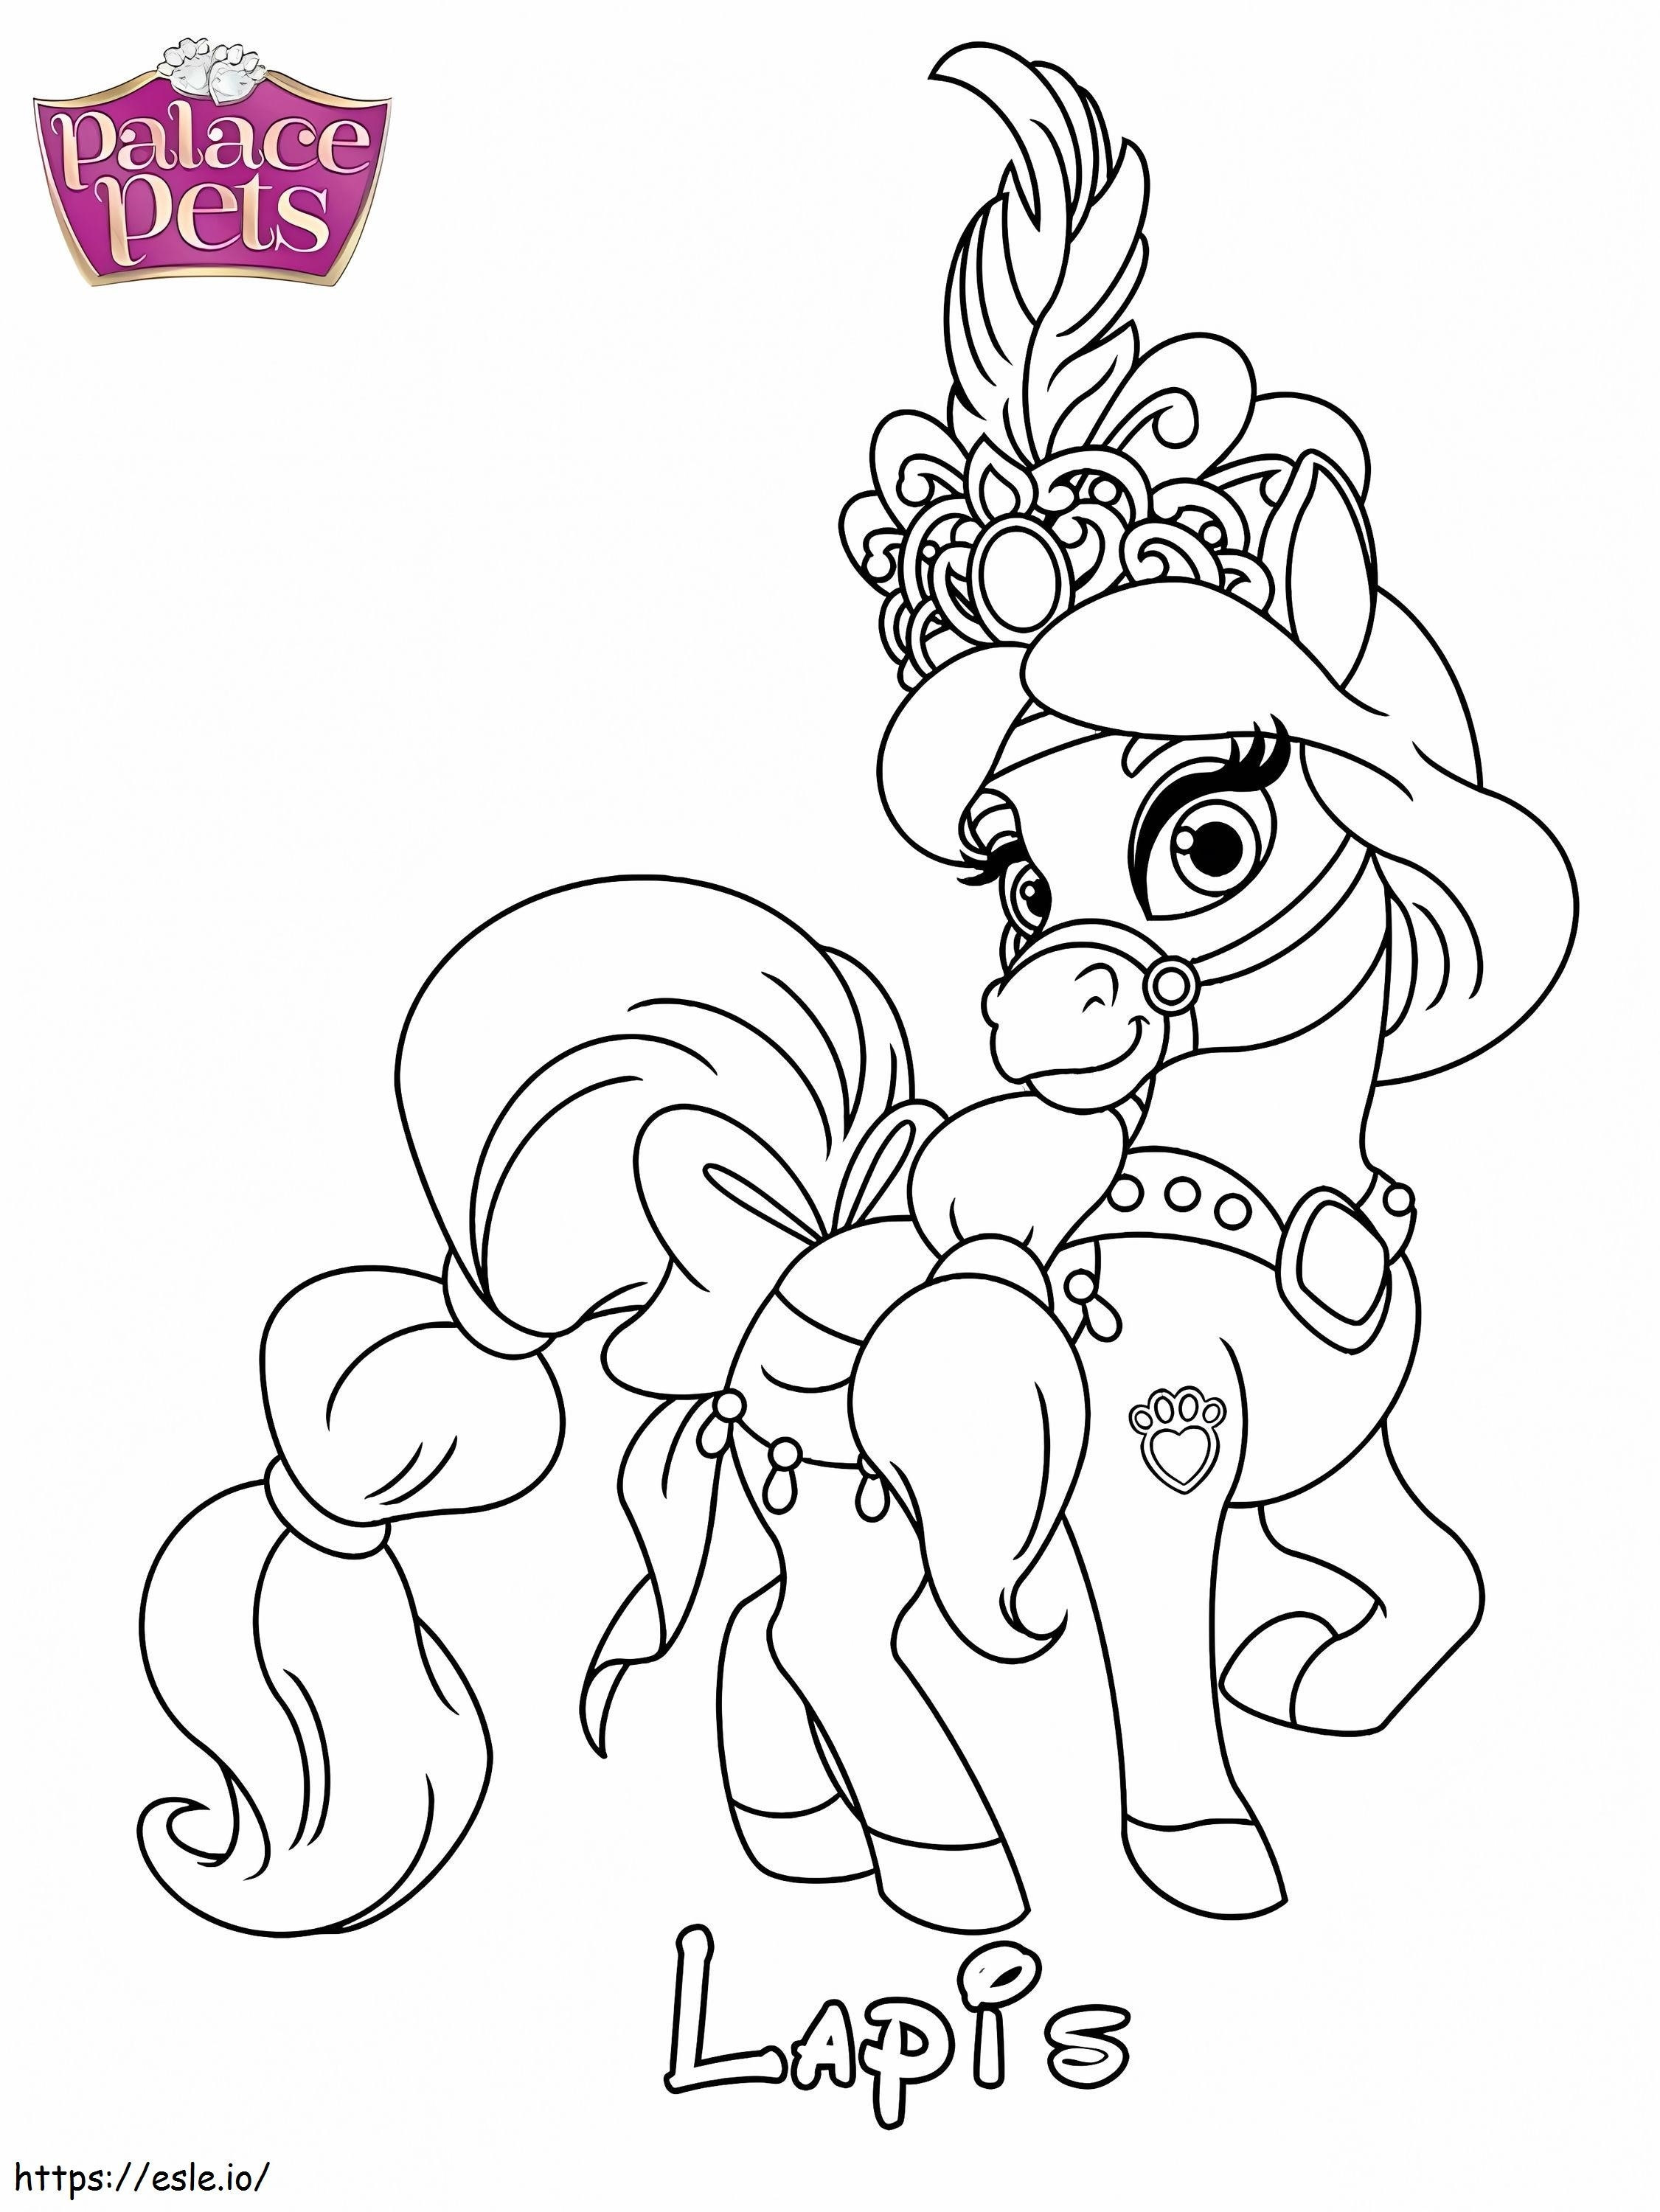 Lapis Princess coloring page